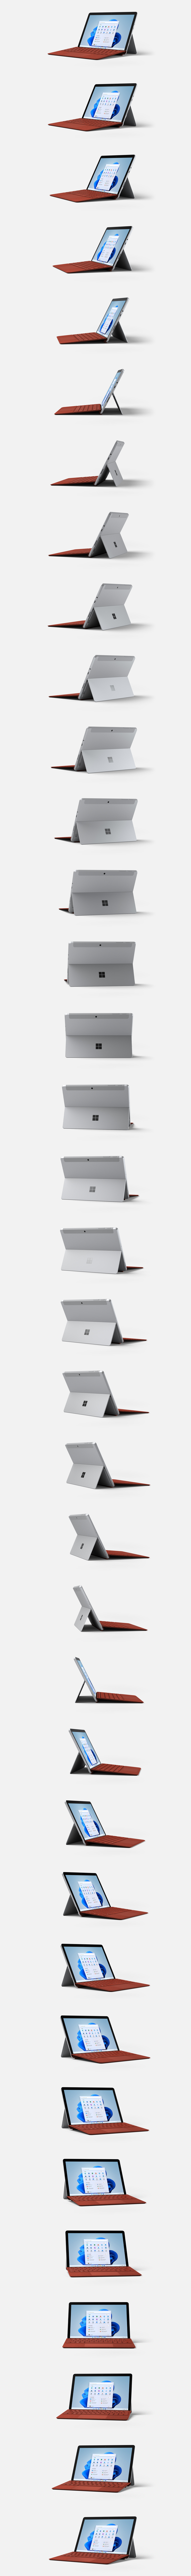 Surface Go 3 yrityksille.